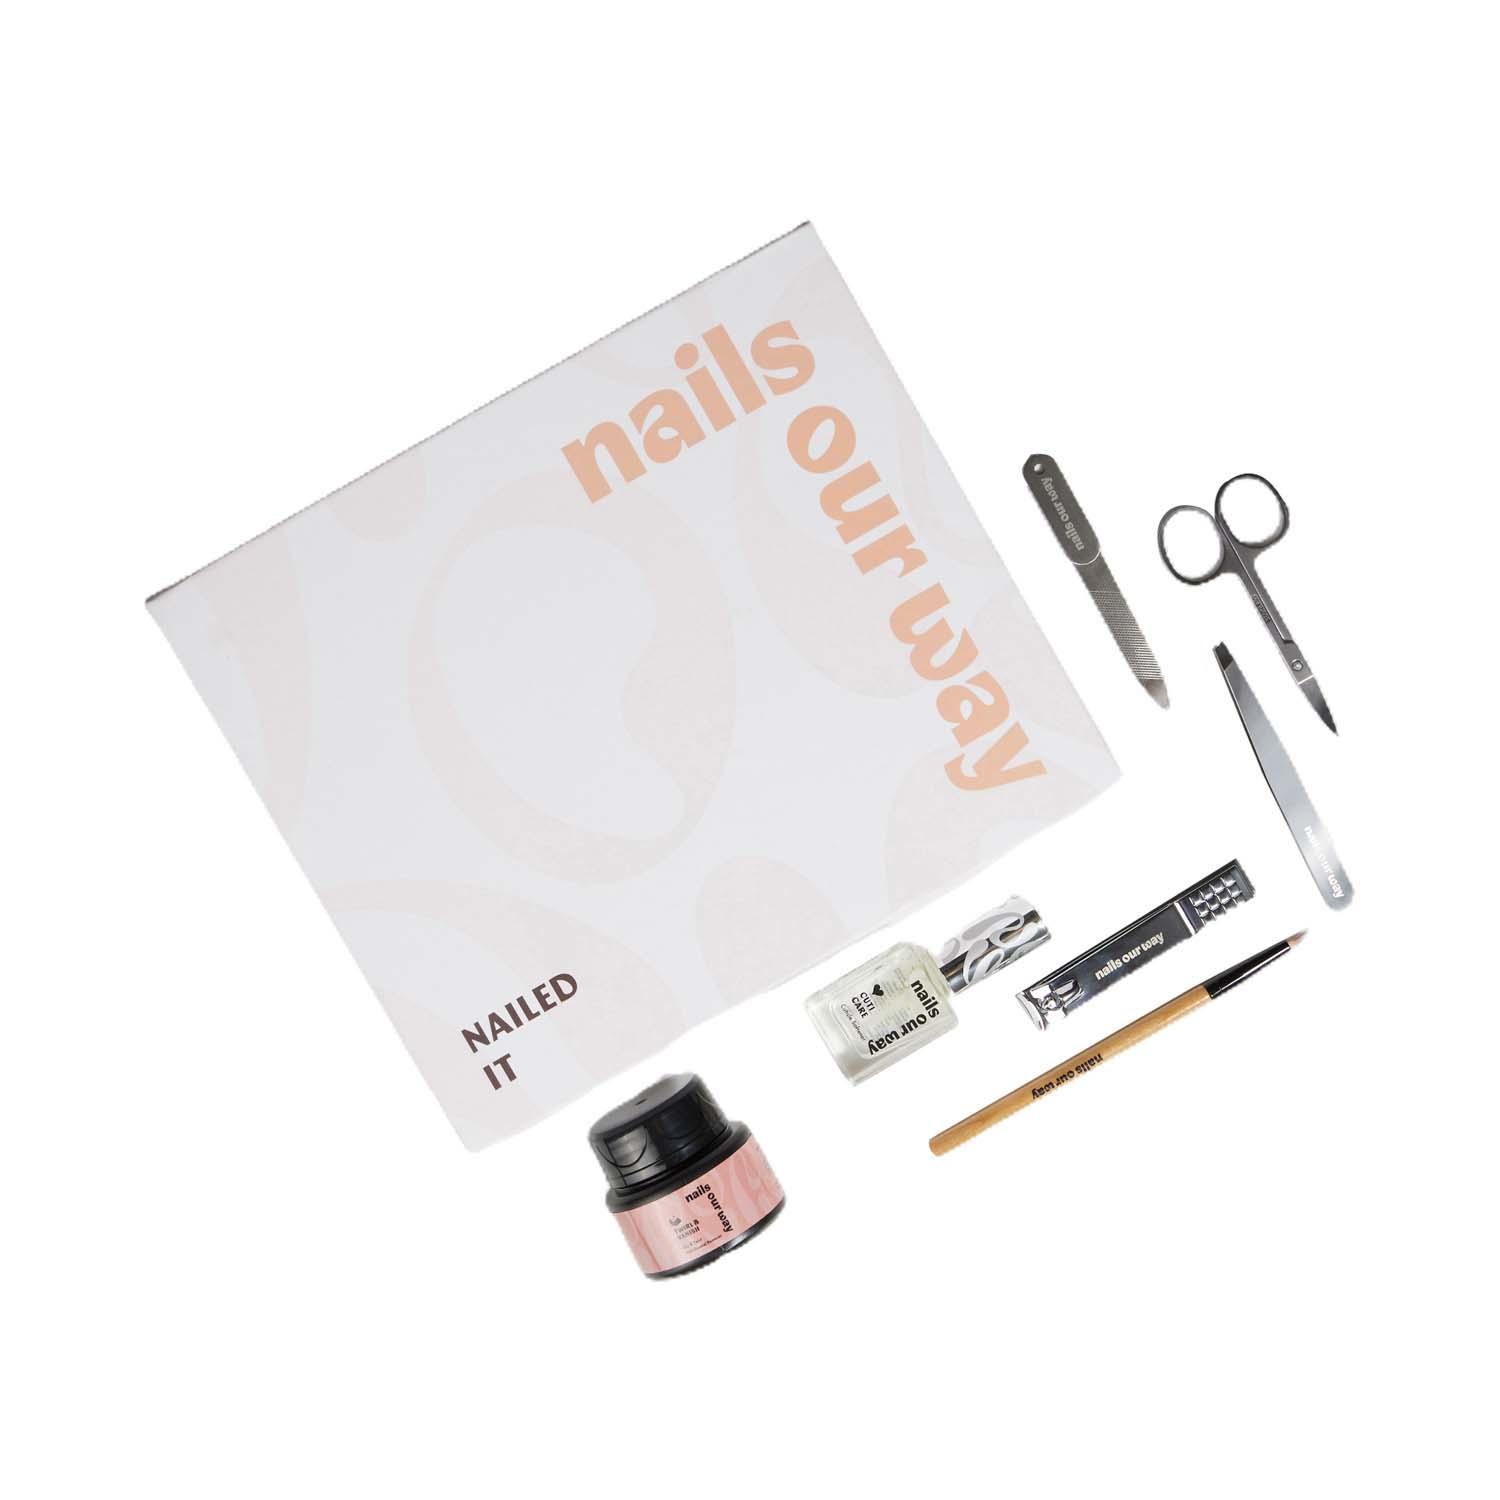 Nails Our Way | Nails Our Way Nailed It Nail Accessories Kit (7 pcs)